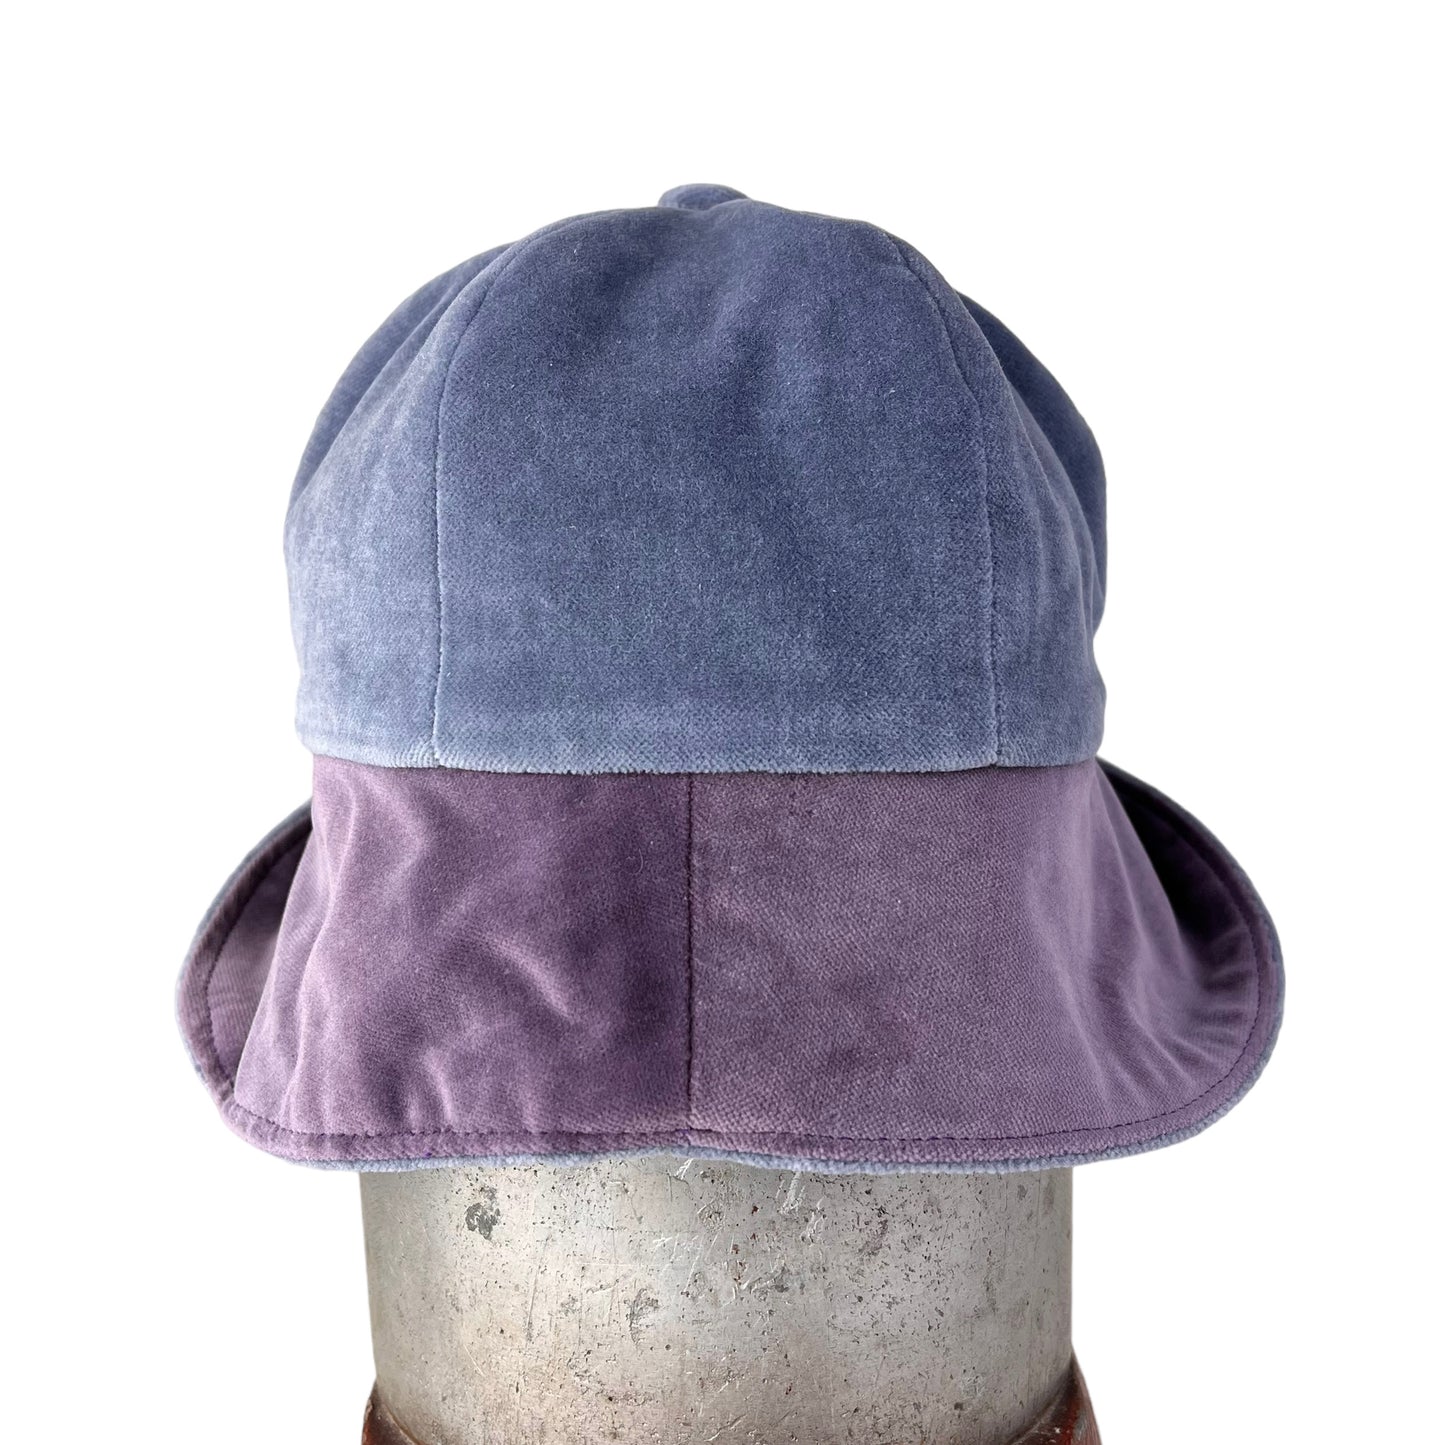 Chloe Velvet Cloche Hat Size Medium Grey Blue